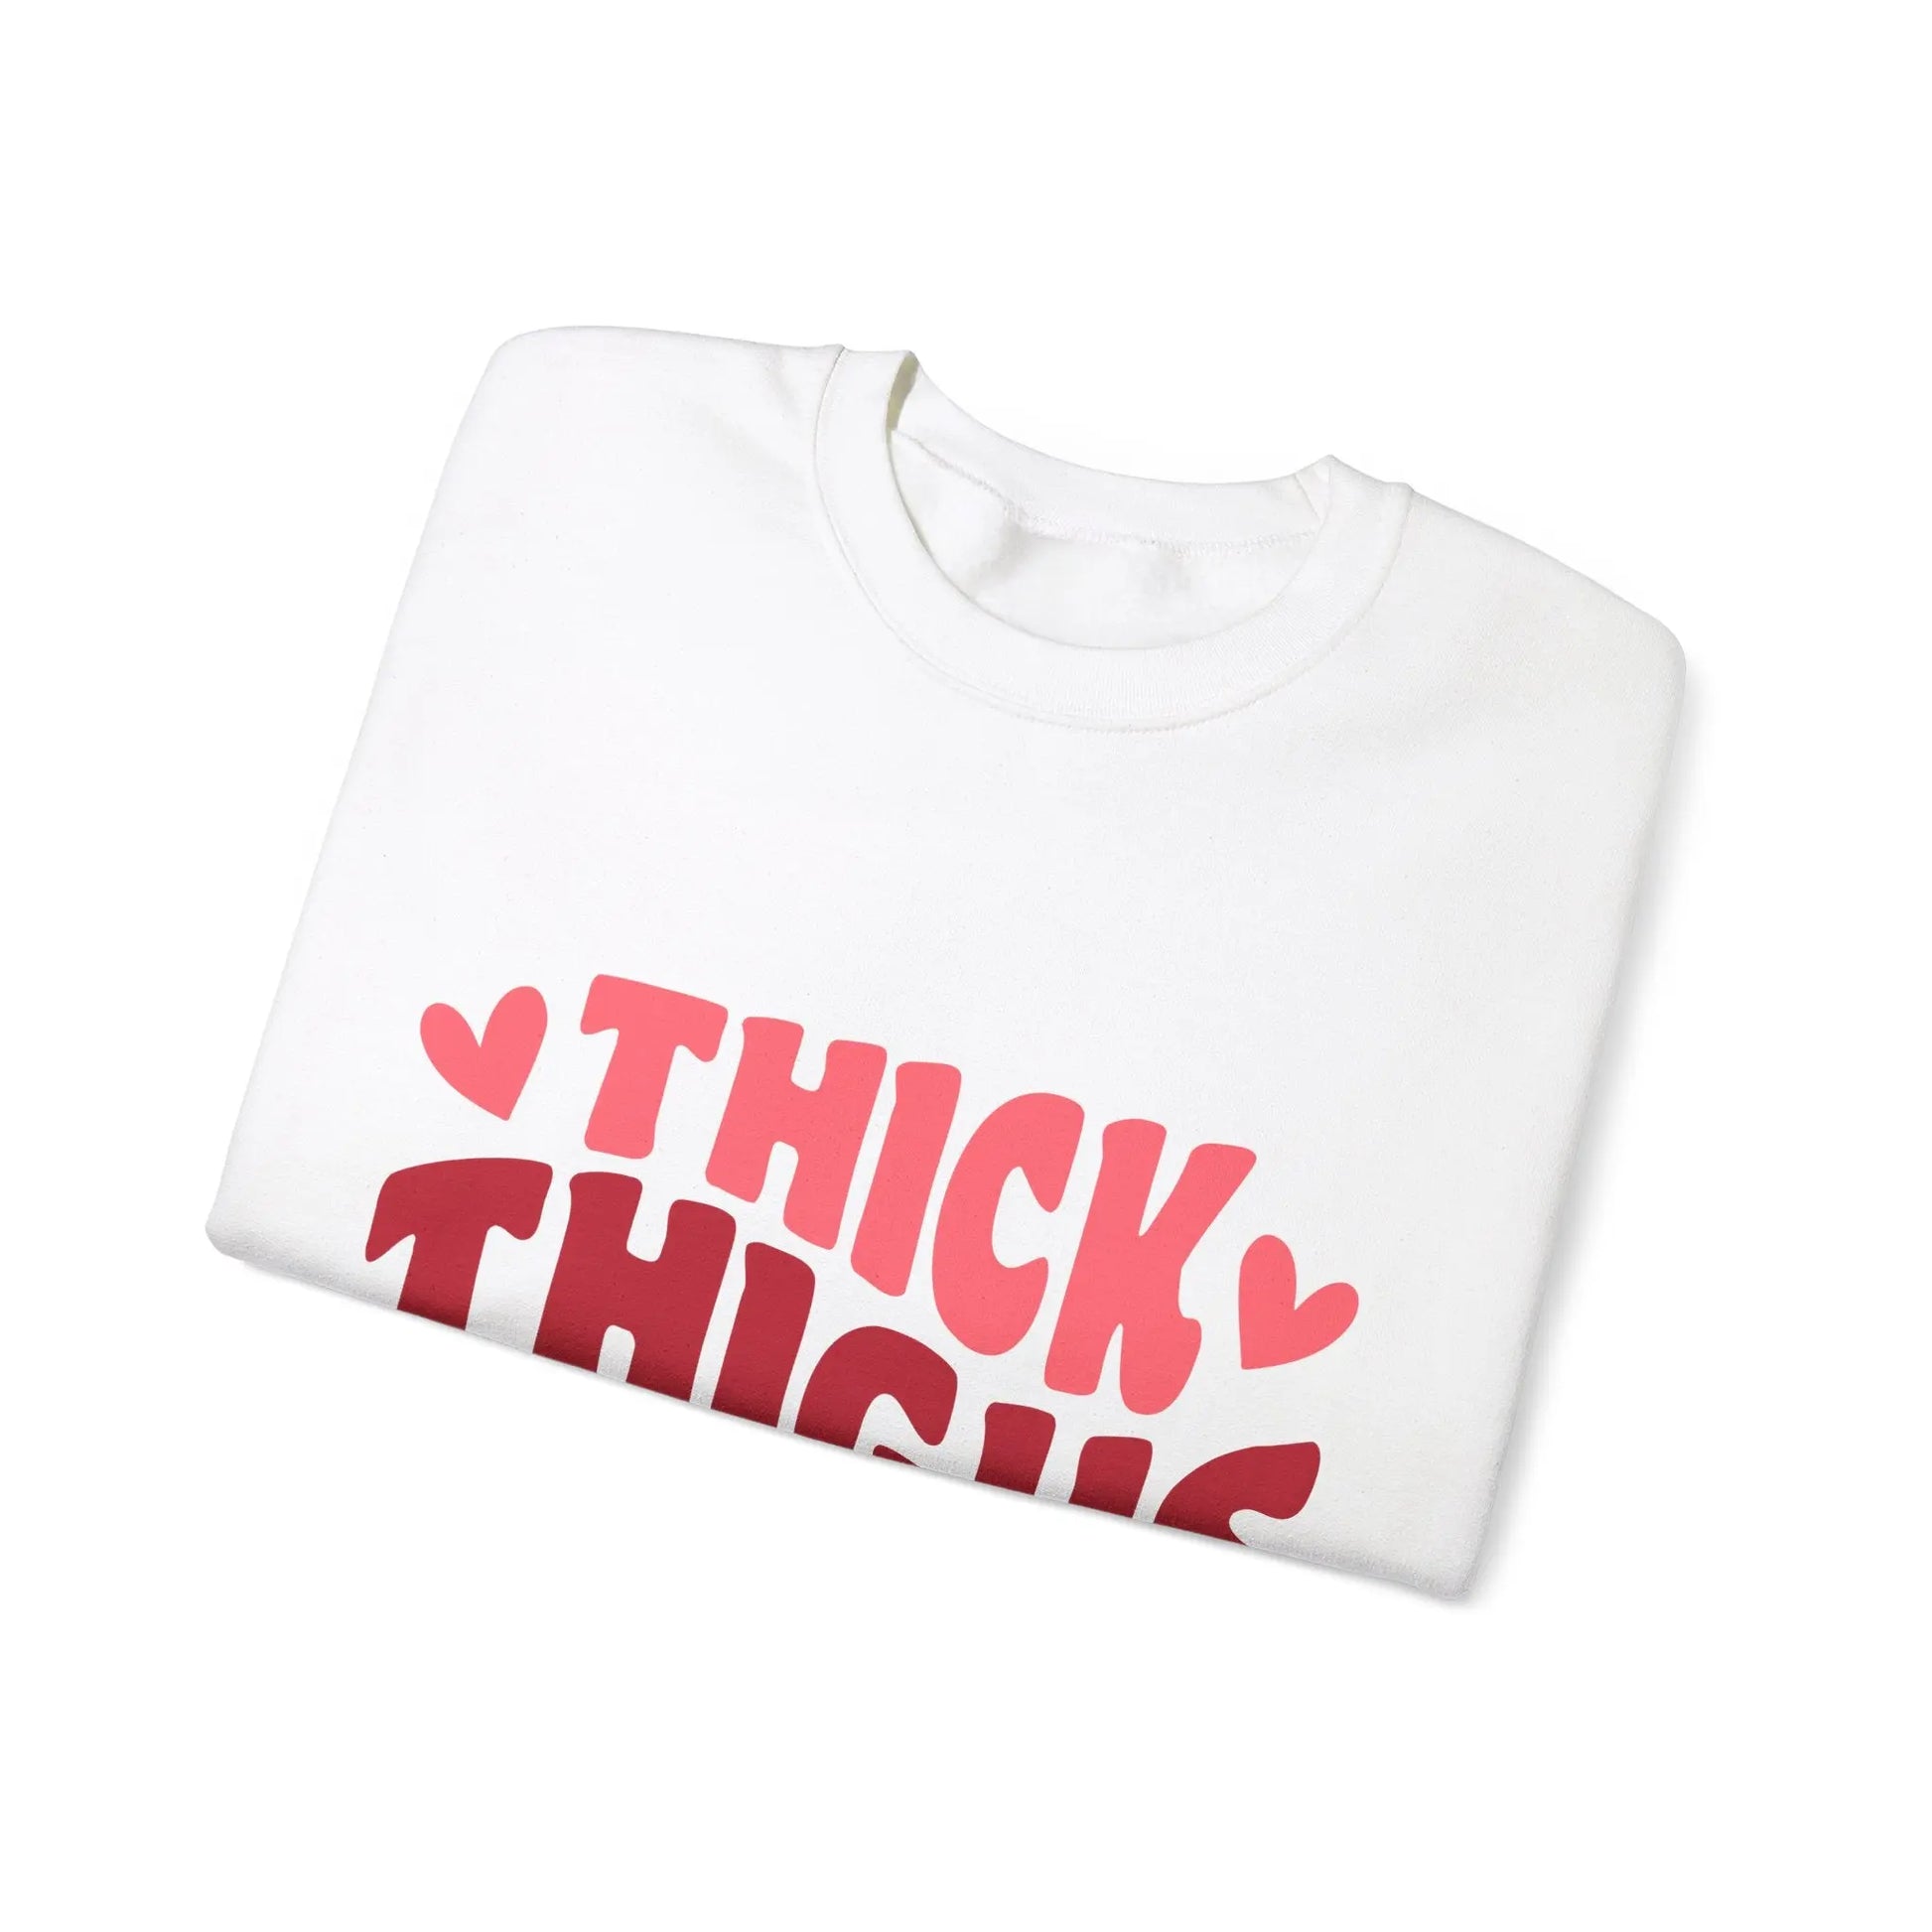 Thick Thighs Valentine Vibes - Unisex Sweatshirt Printify